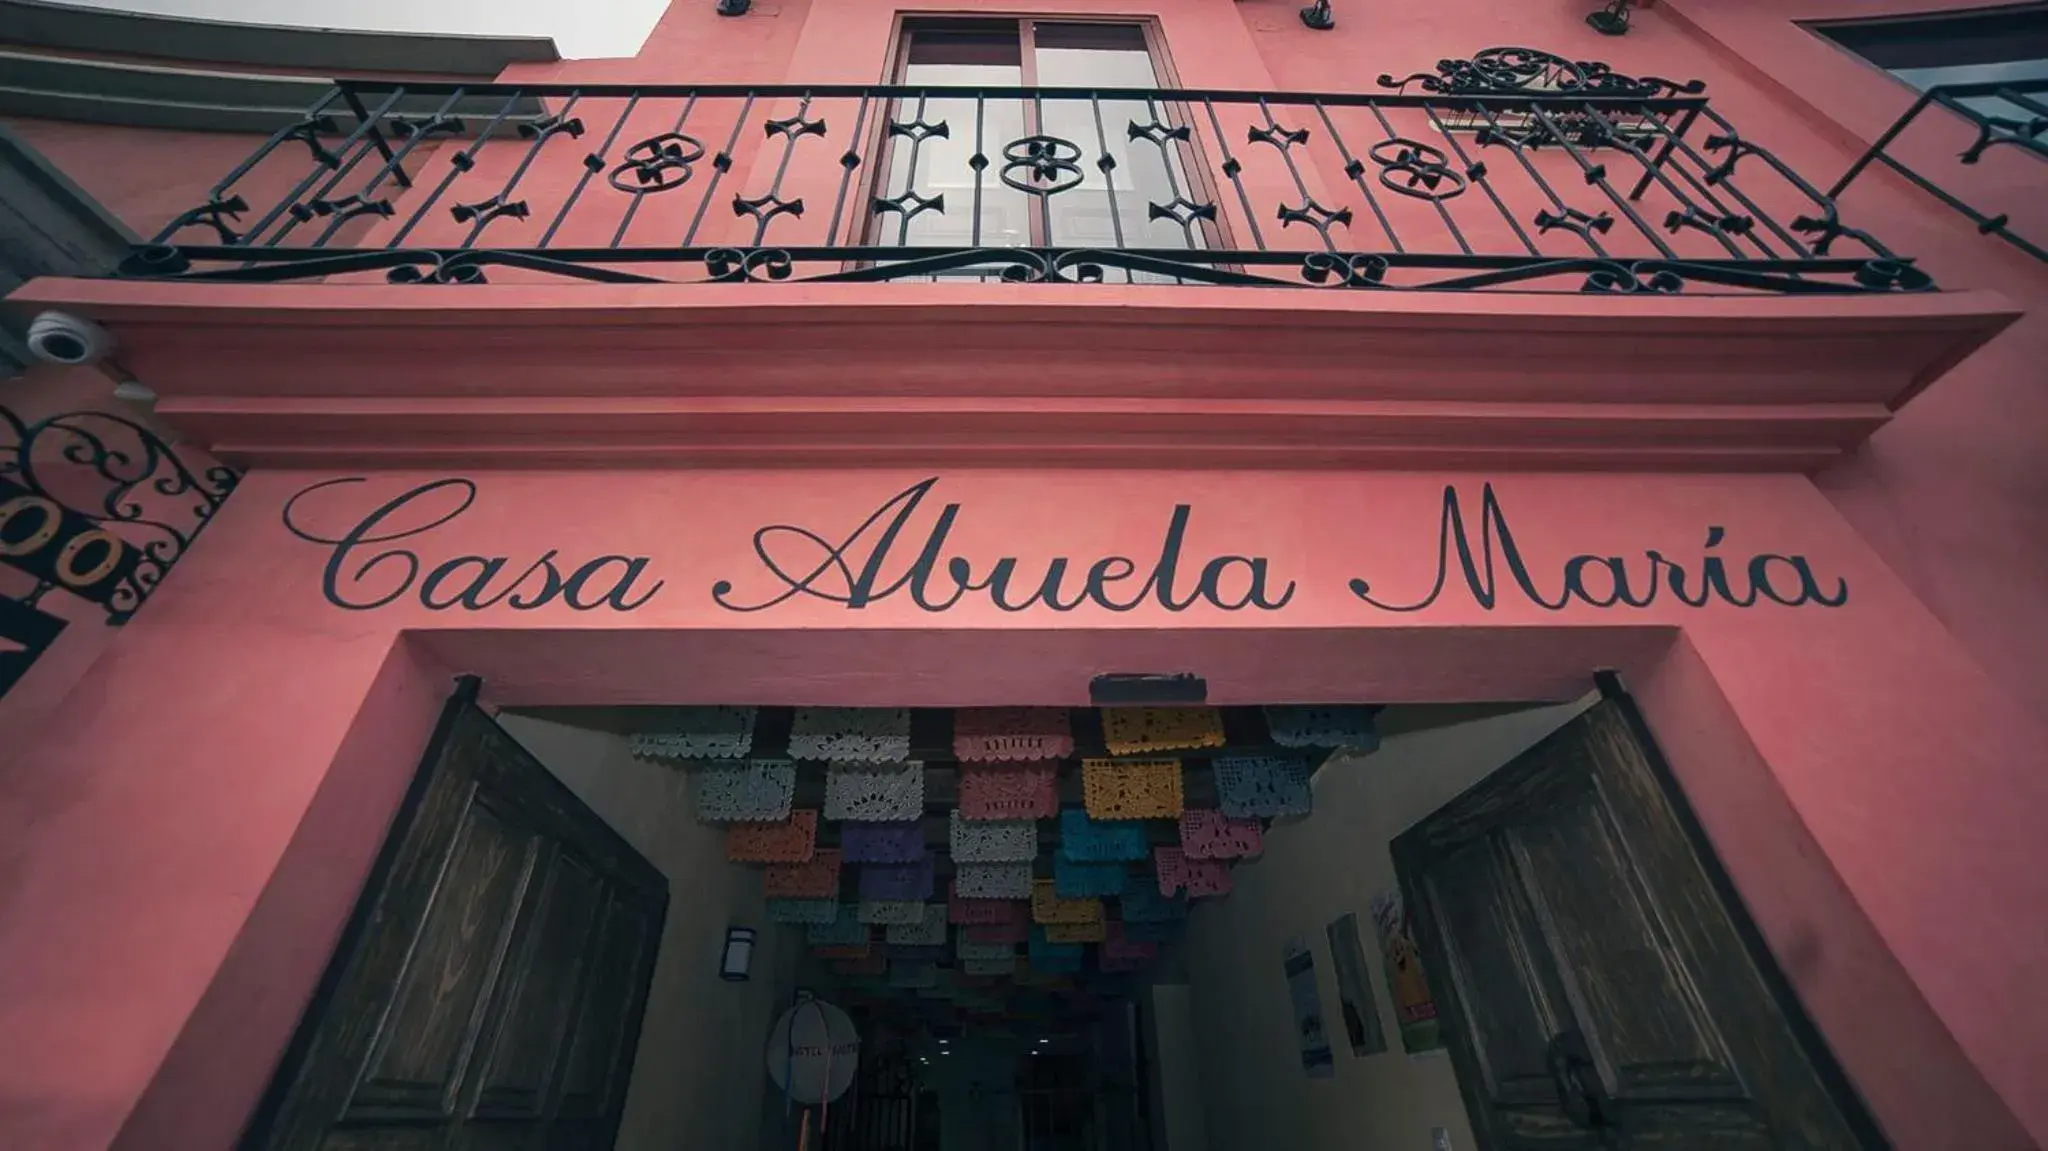 Hotel Boutique Casa Abuela Maria